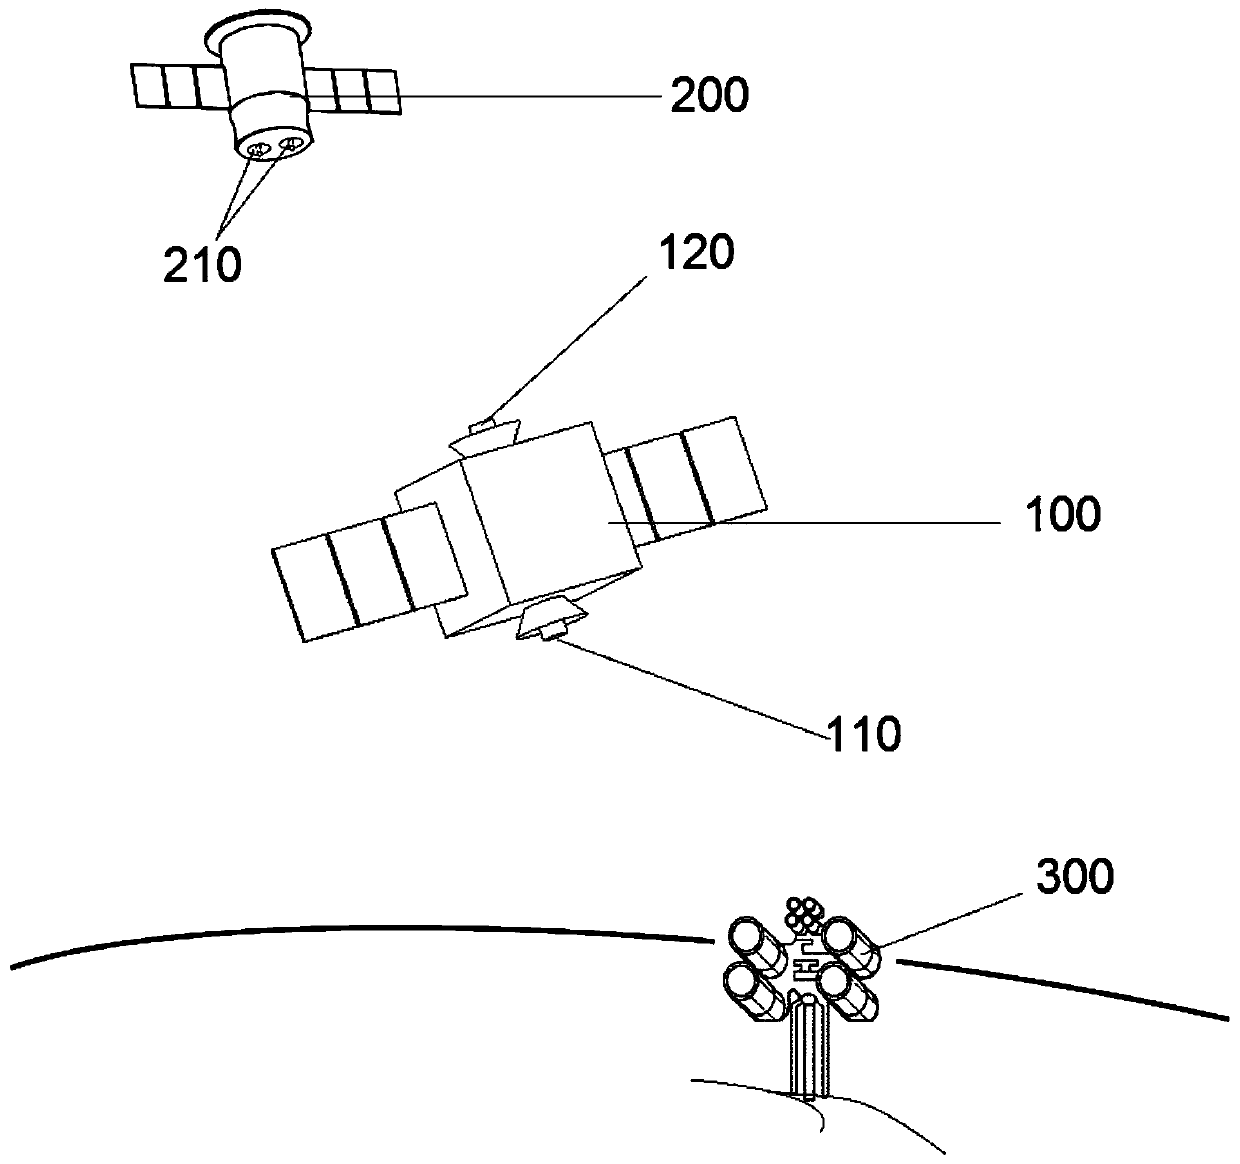 Distributed remote sensing satellite system